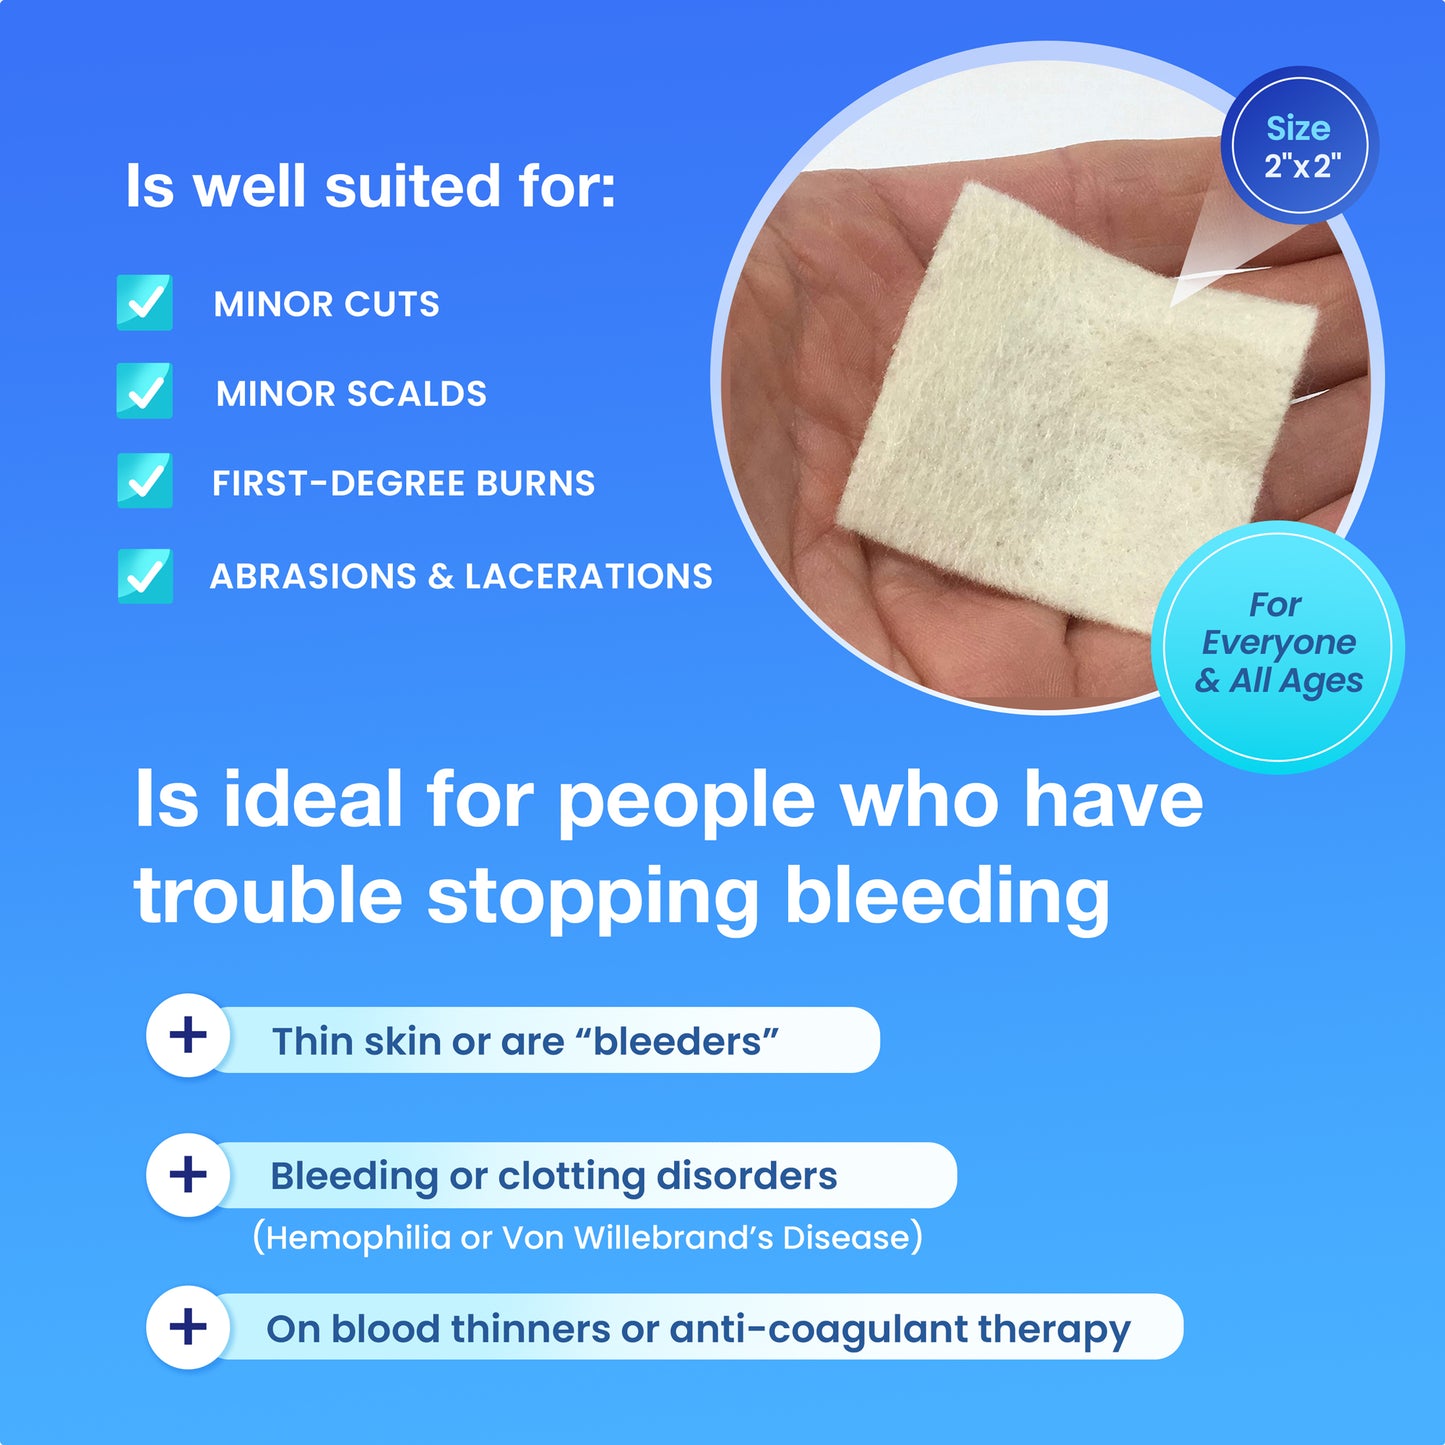 AllaQuix® Stop Bleeding Quick Kit - Basic